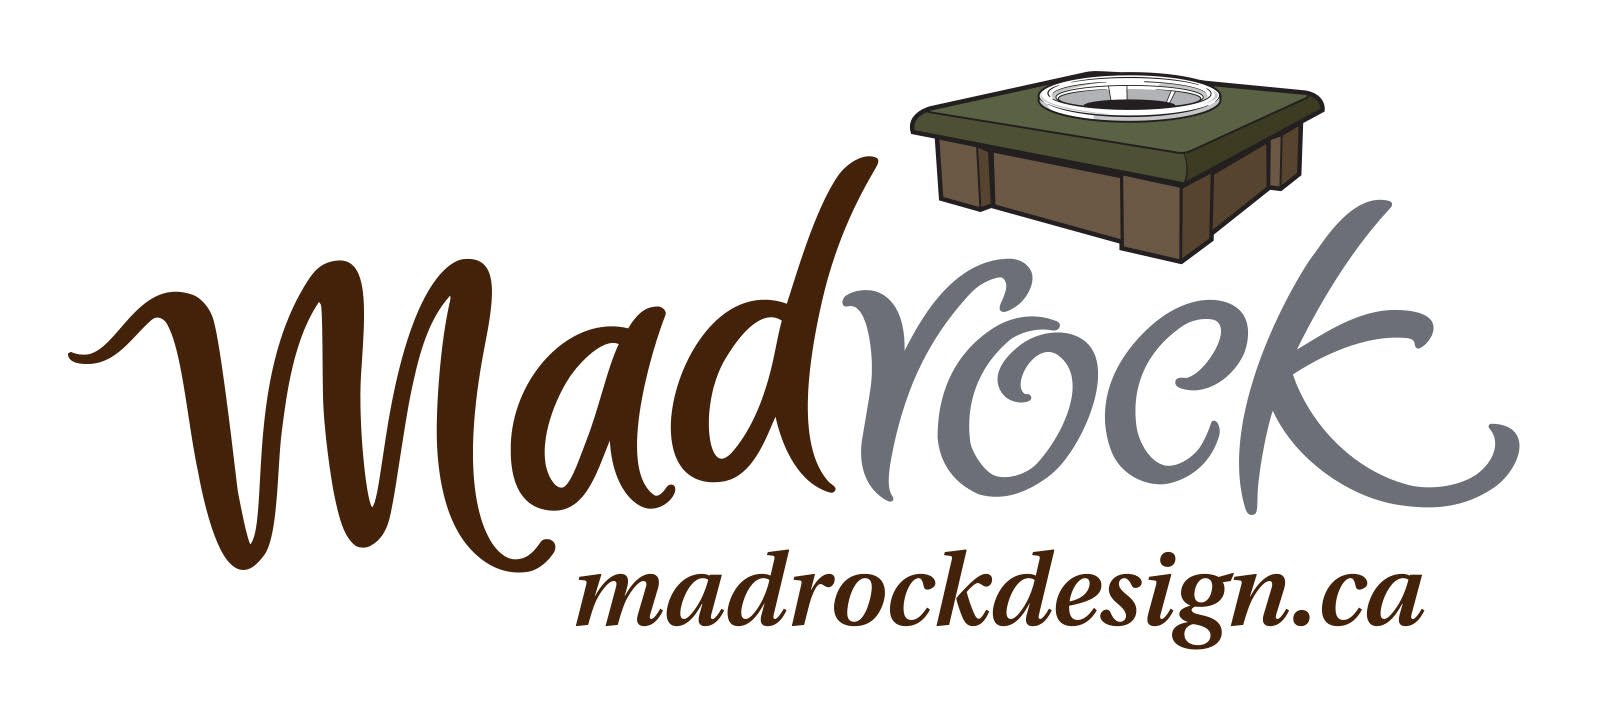 Madrock Designs Logo.jpg